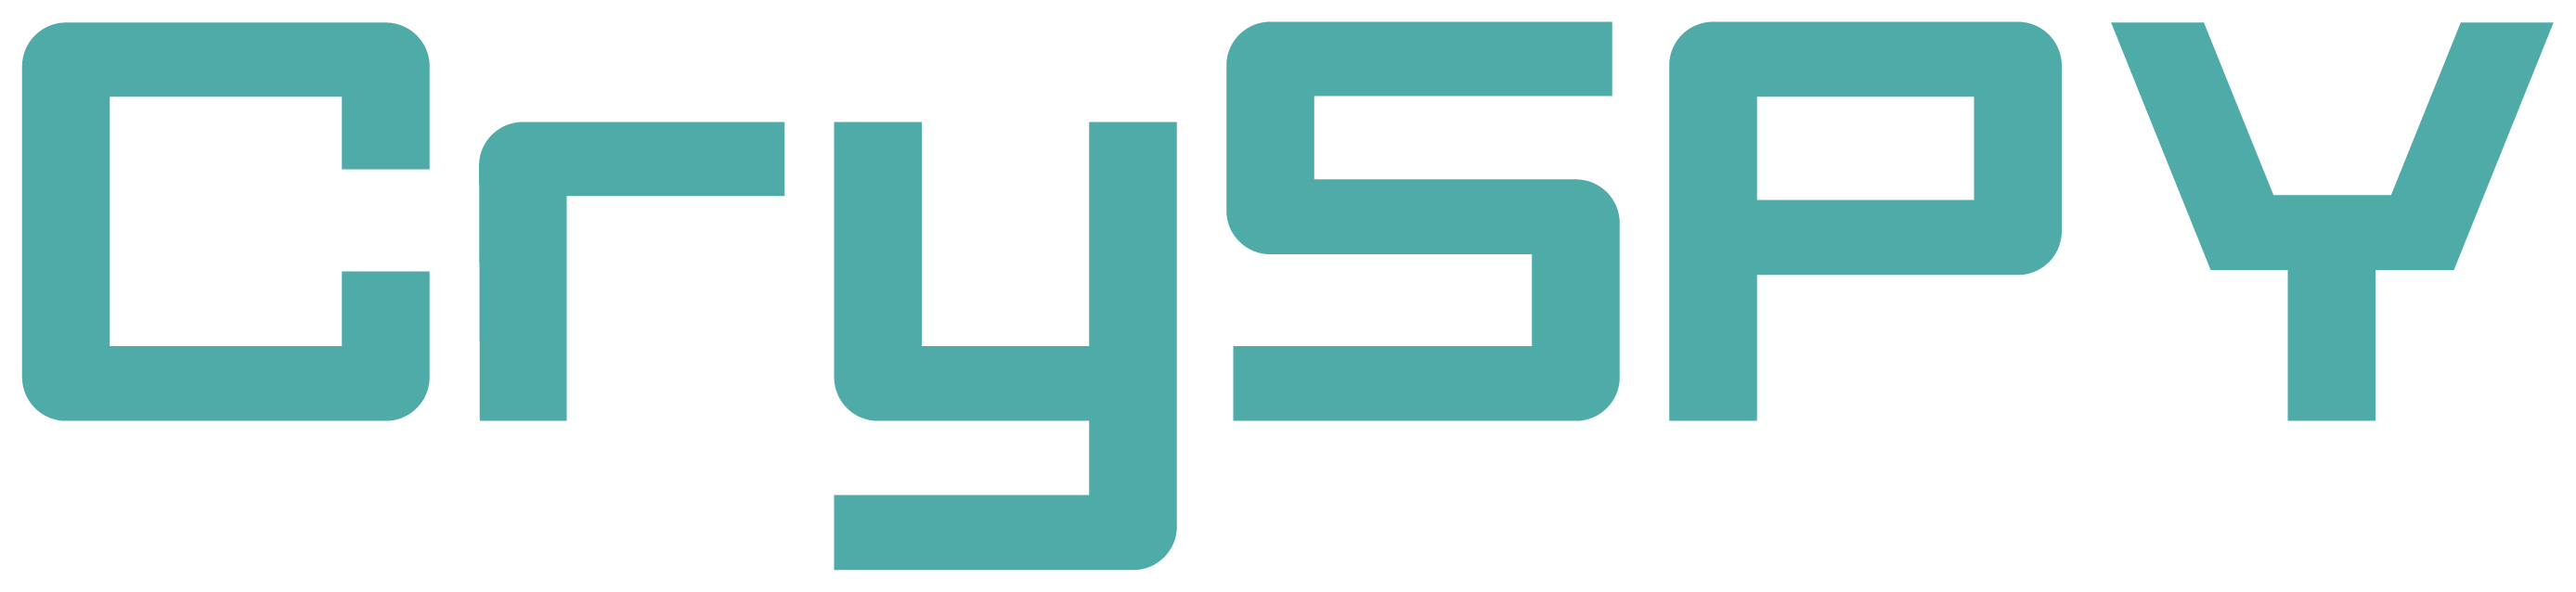 logo_jpg2